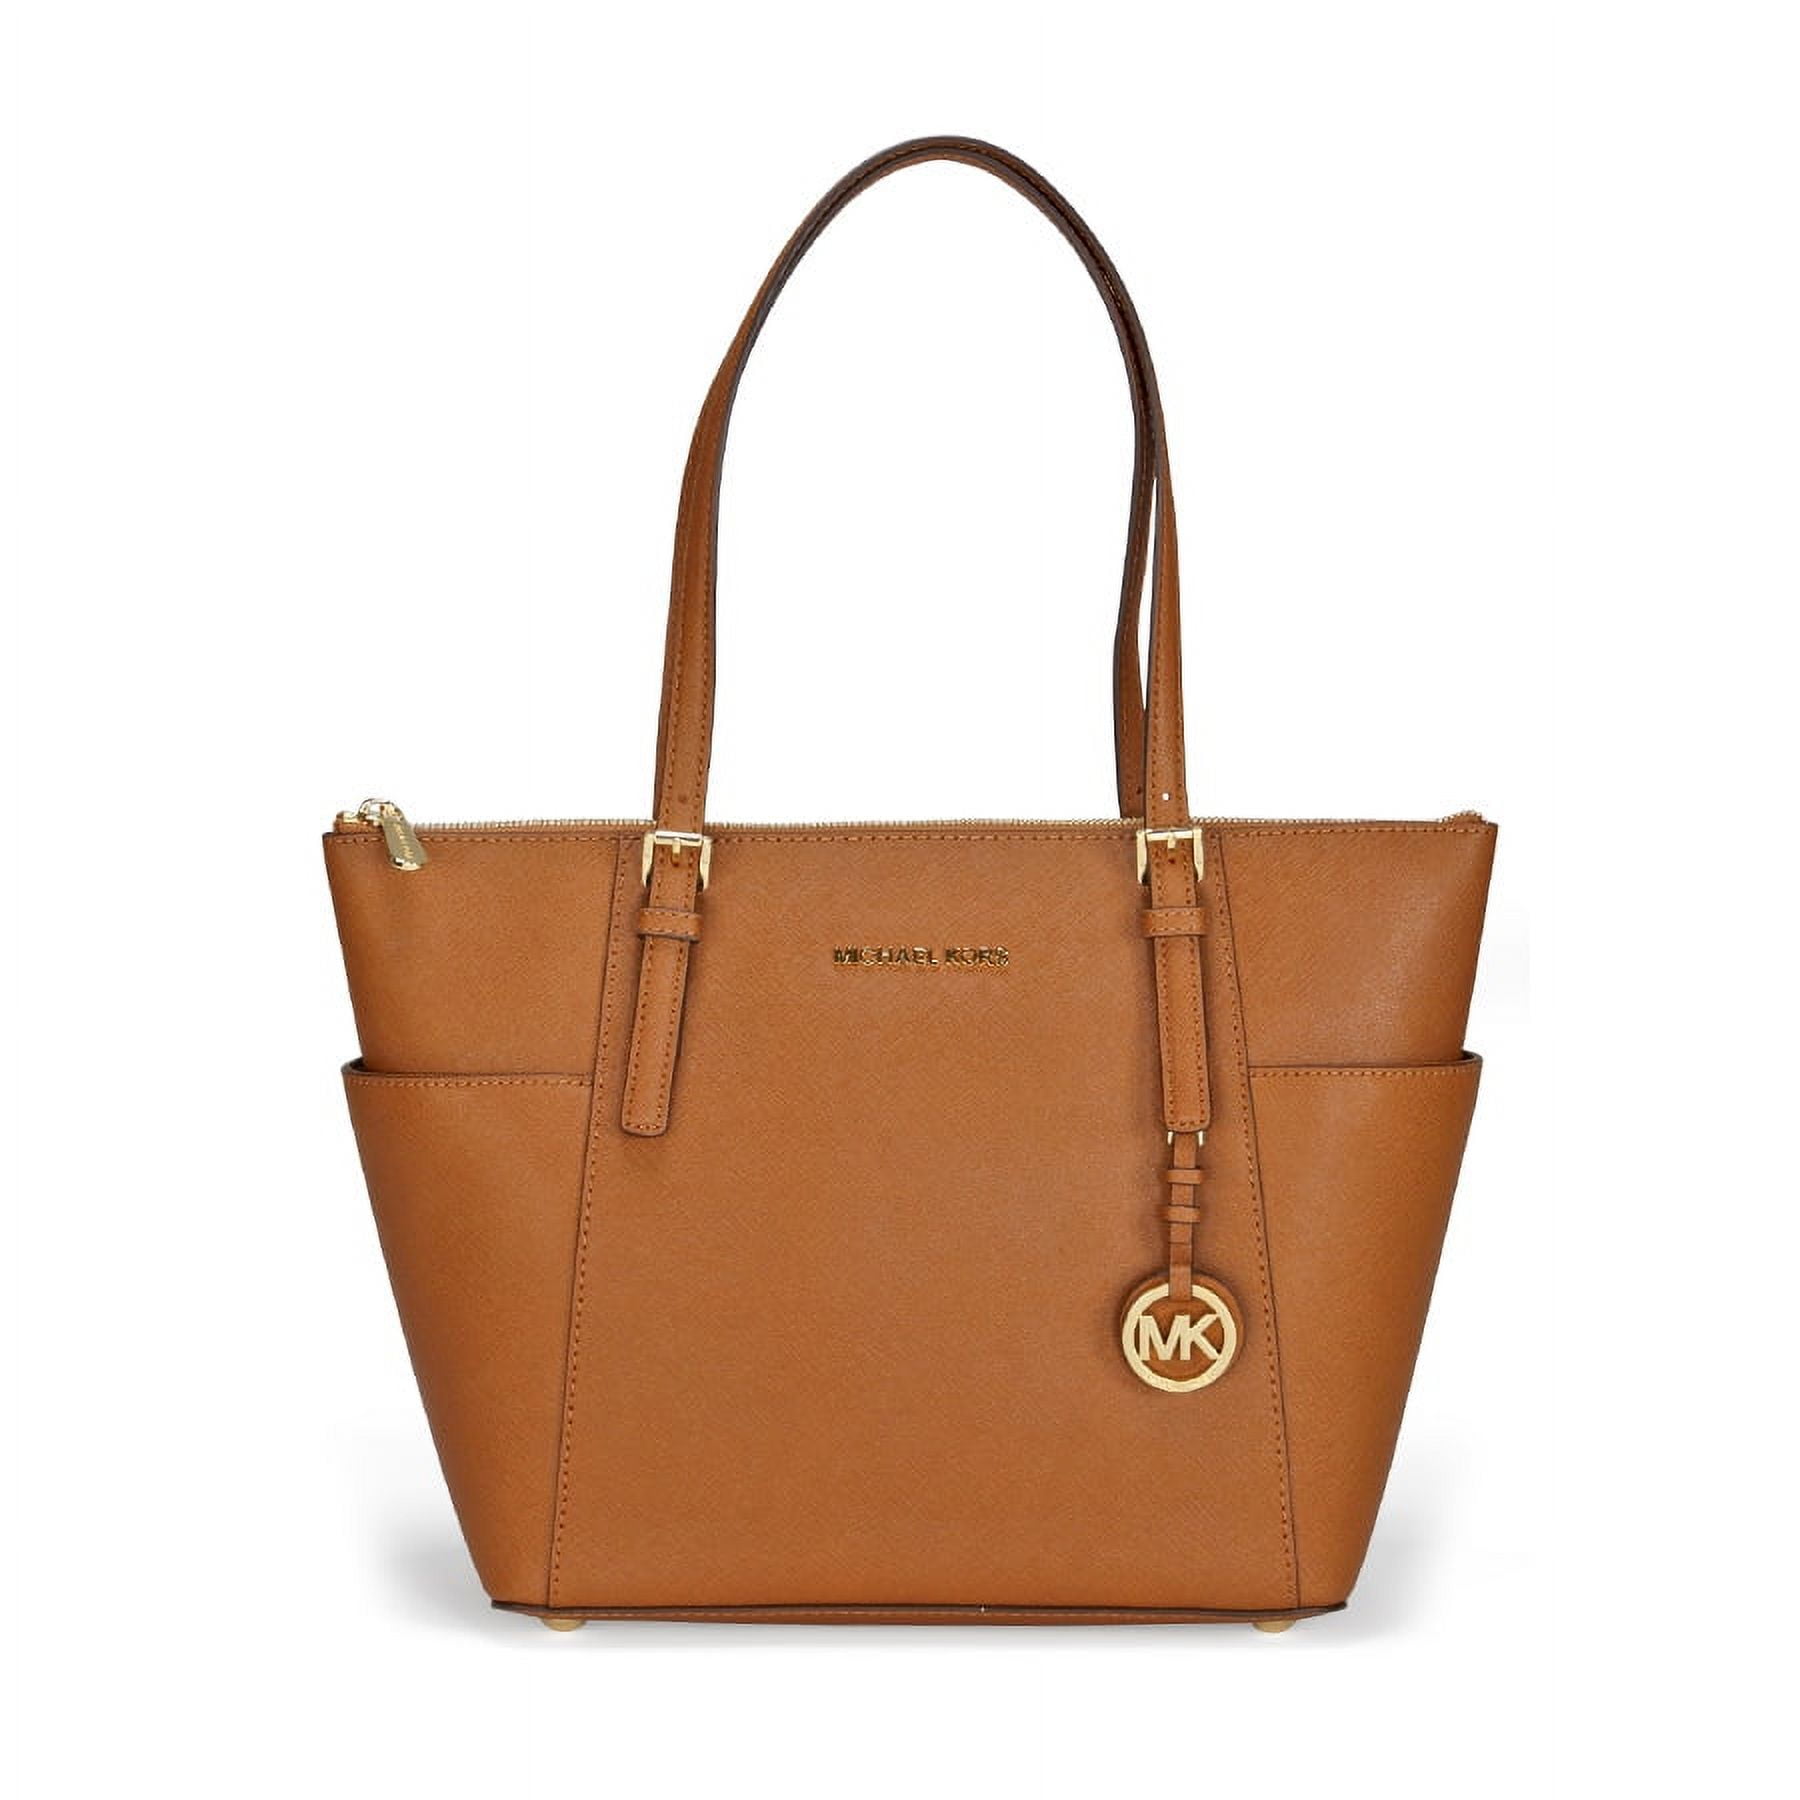 Tory Burch Robinson Tote Satchel Top Handle Bag Rose Sachet (pale pink)  Medium Saffiano Leather Handbag